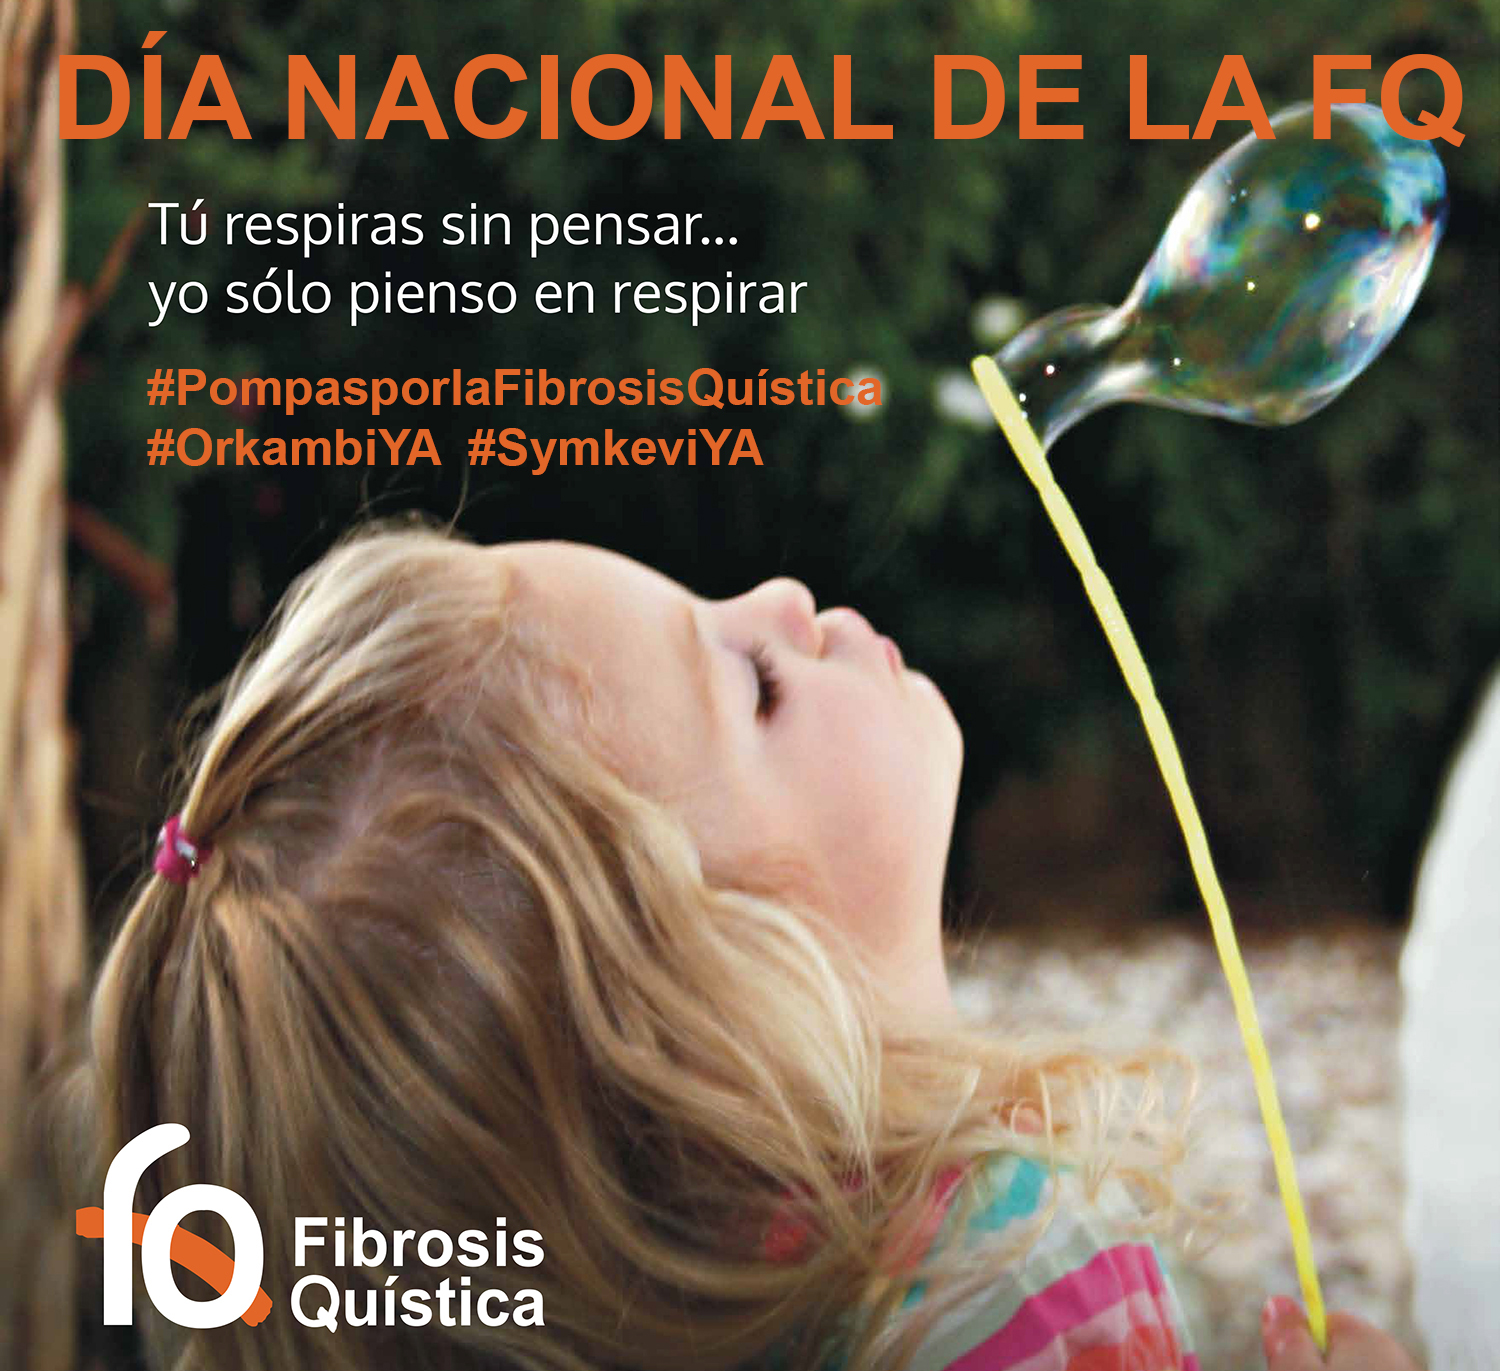 federacion española fibrosis quistica 24 de abril 4o miercoles de abril dia nacional de la fibrosis quistica